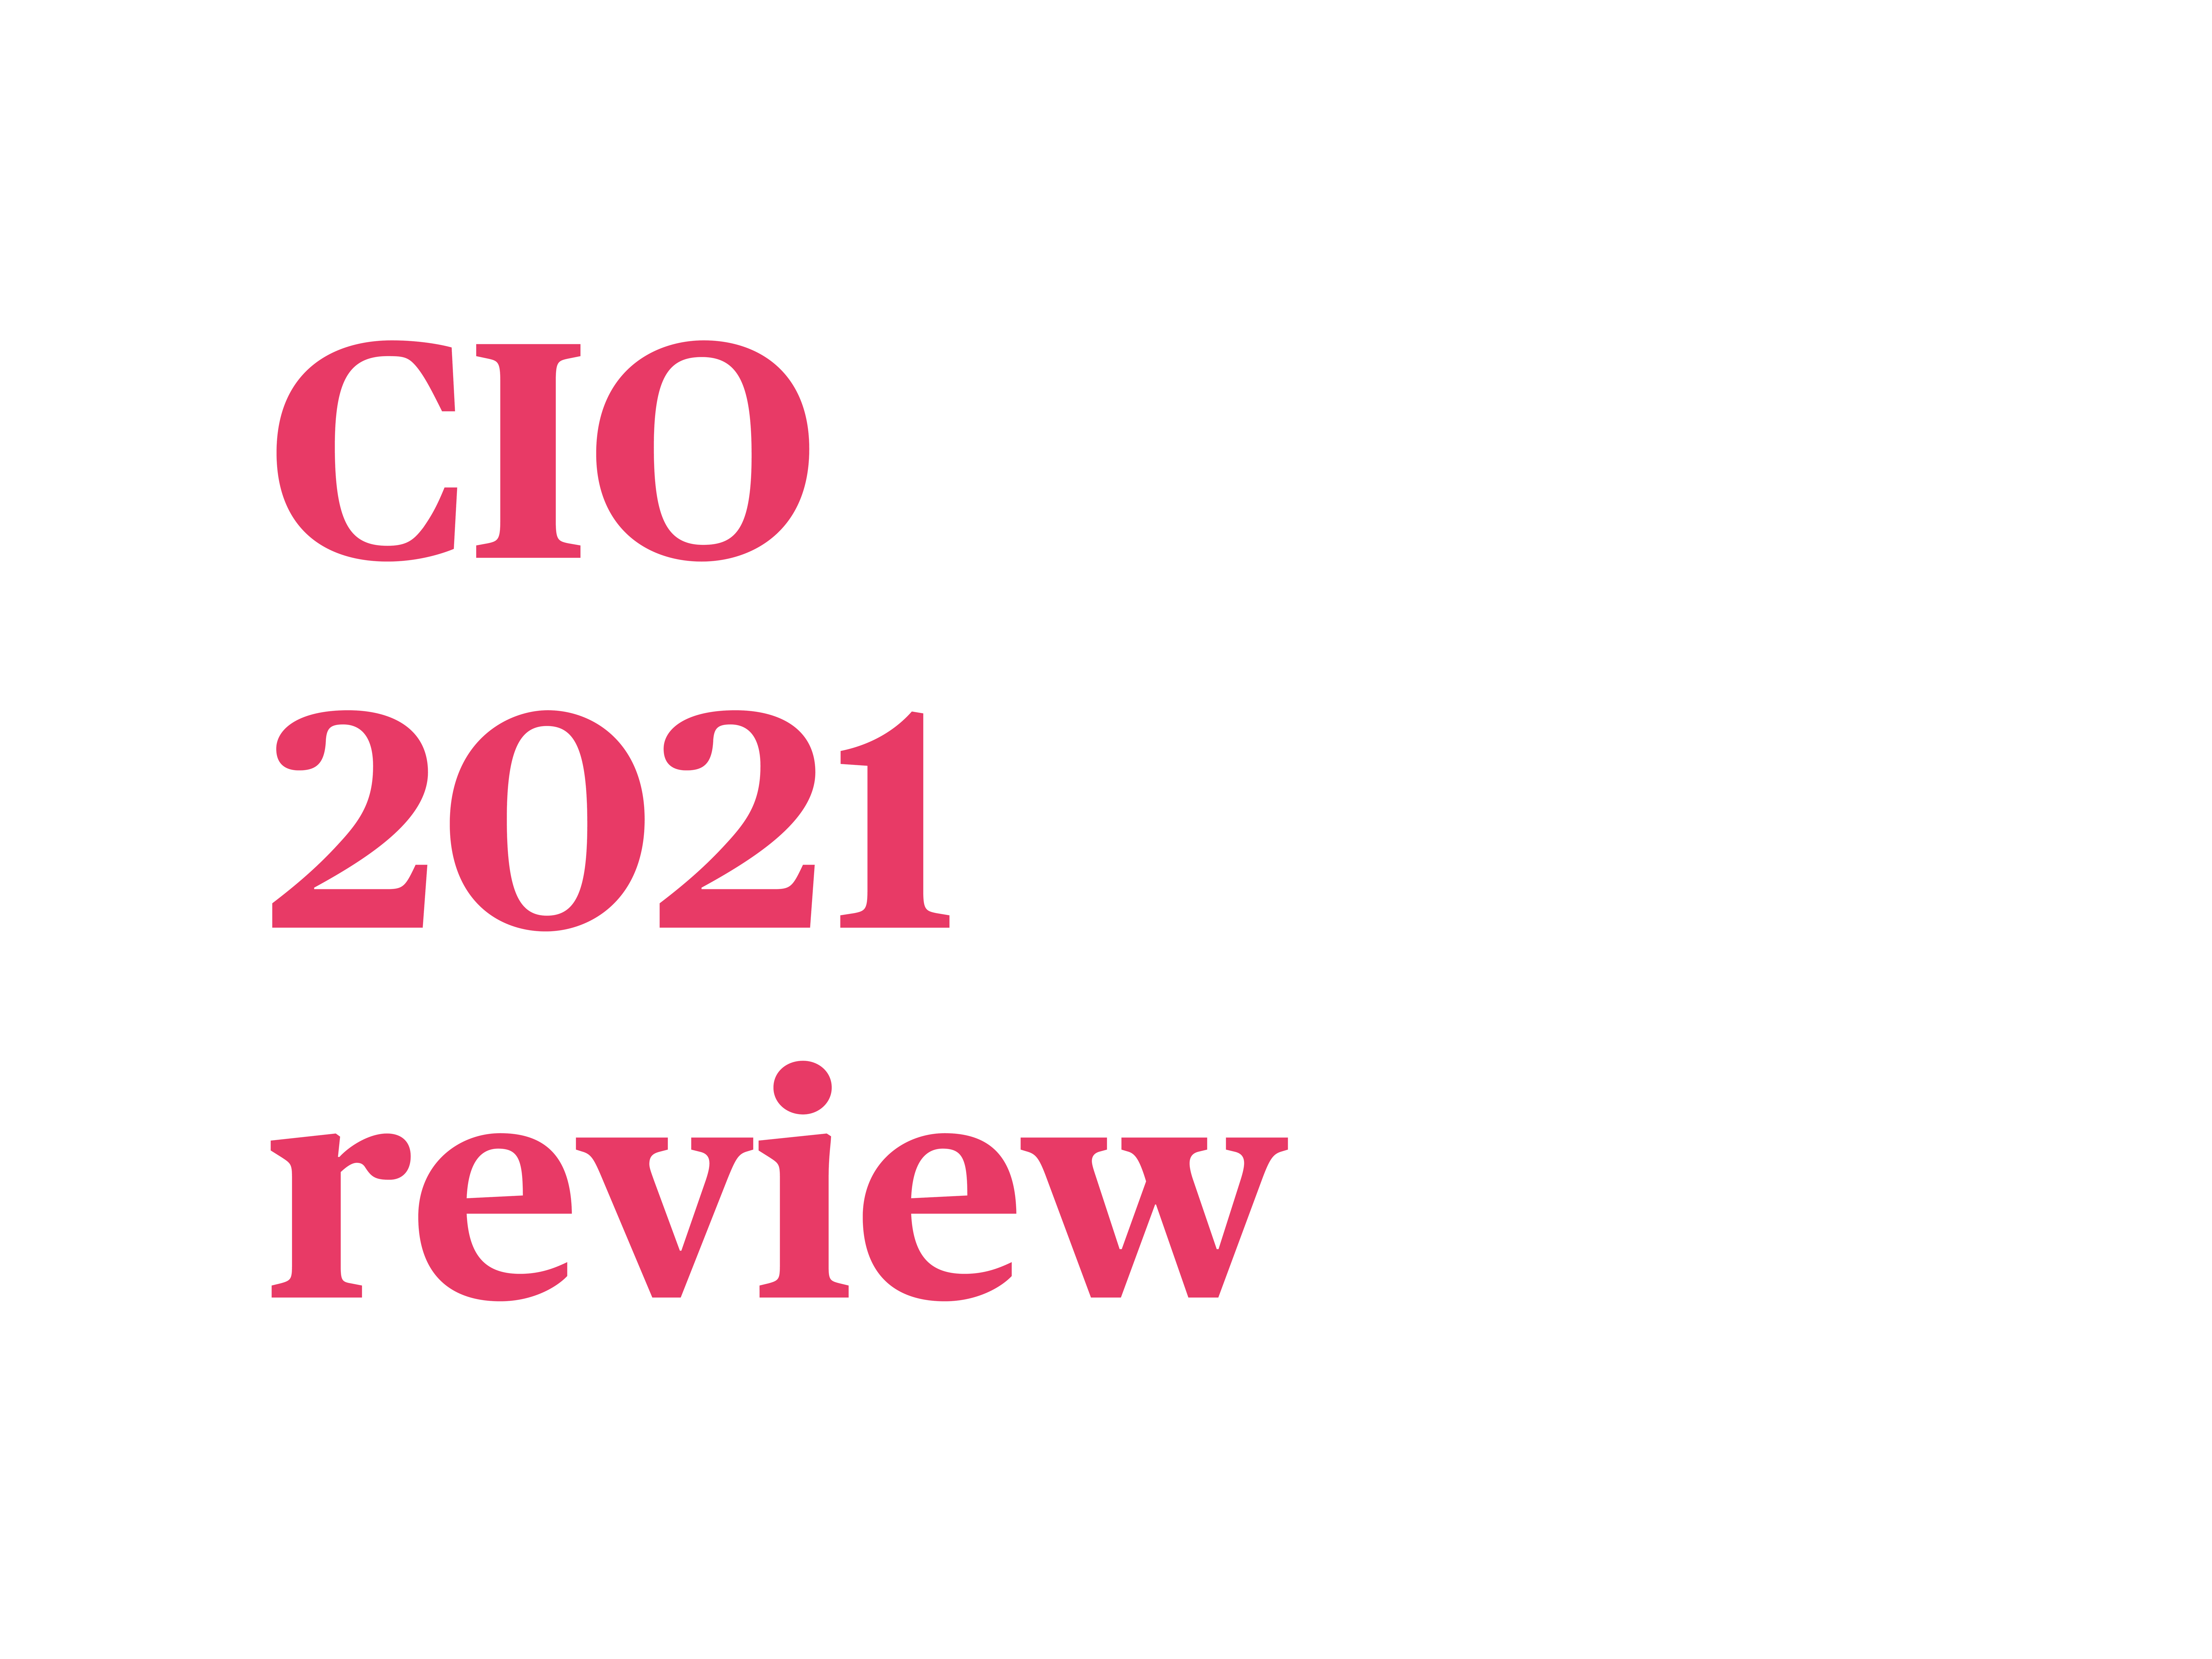 CIO 2021 review